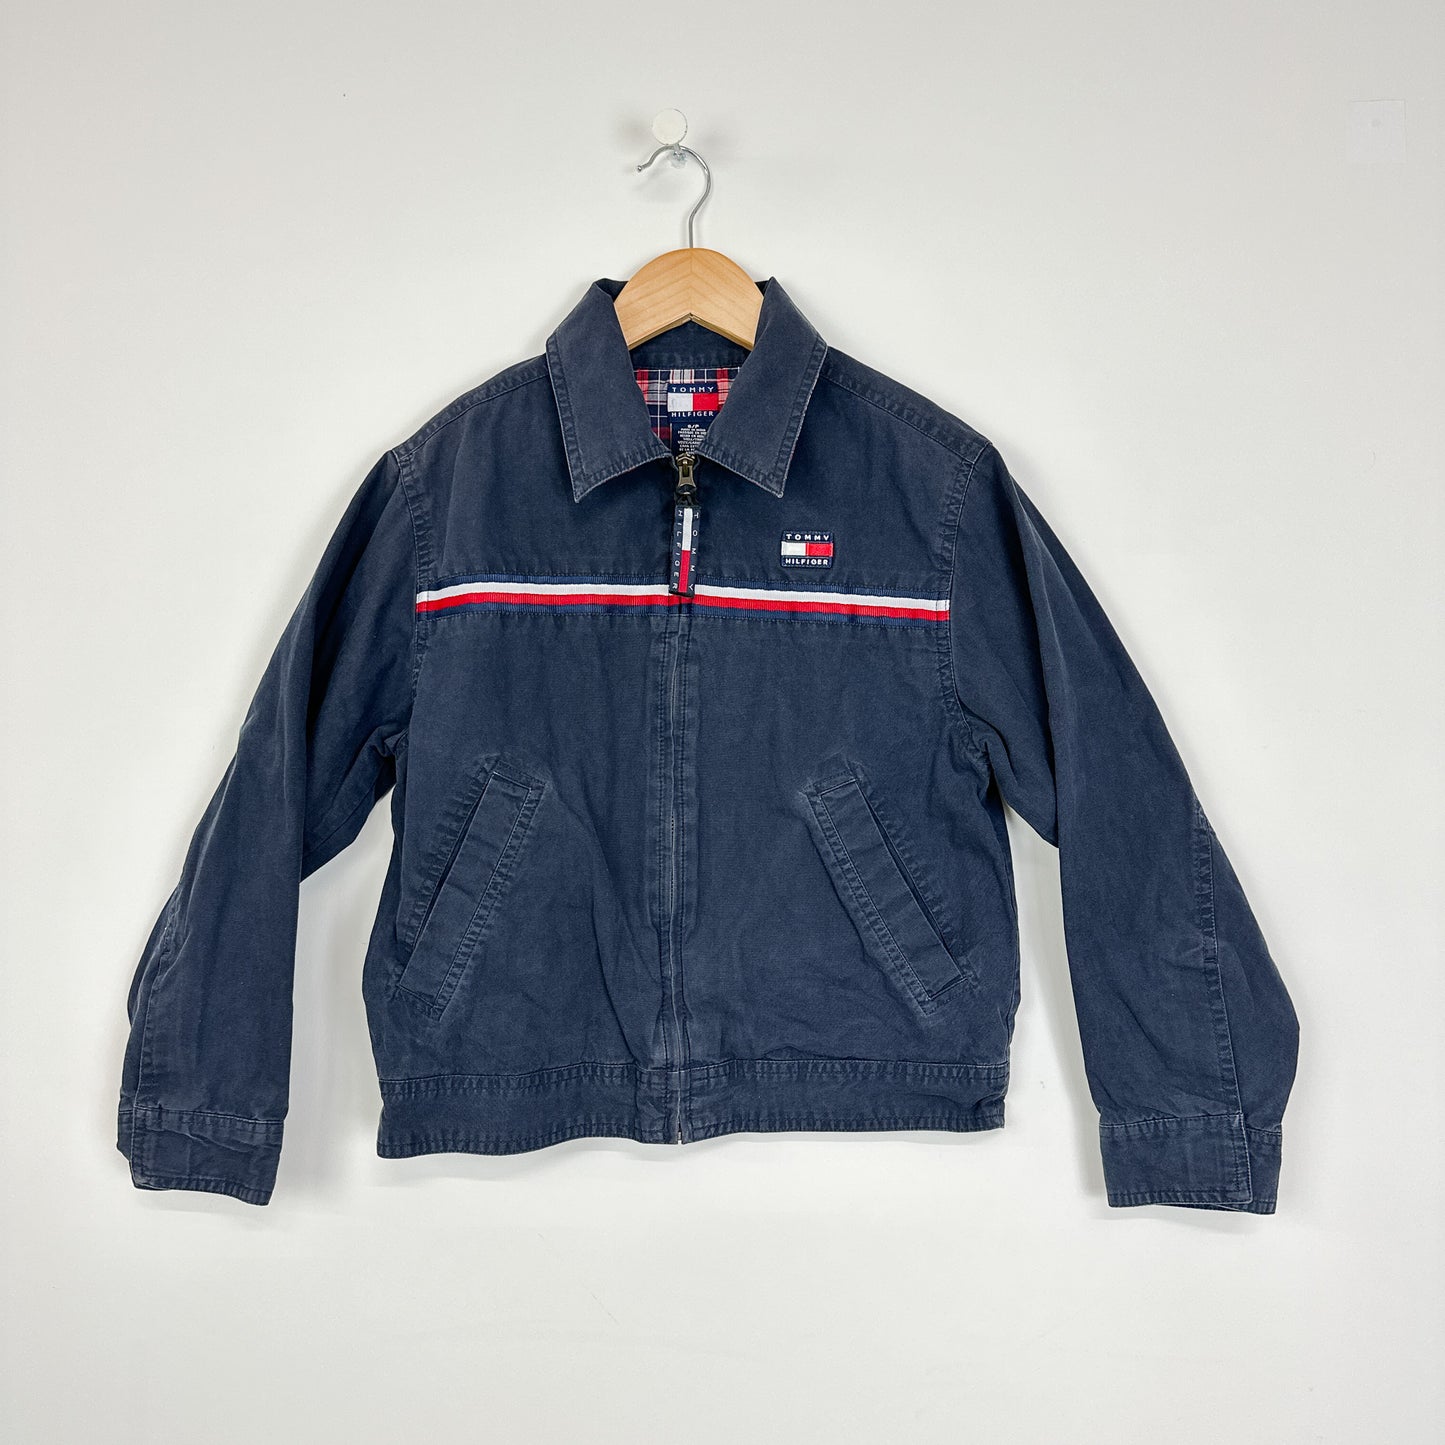 Vintage Tommy Lightweight Jacket - Size 8-10yr